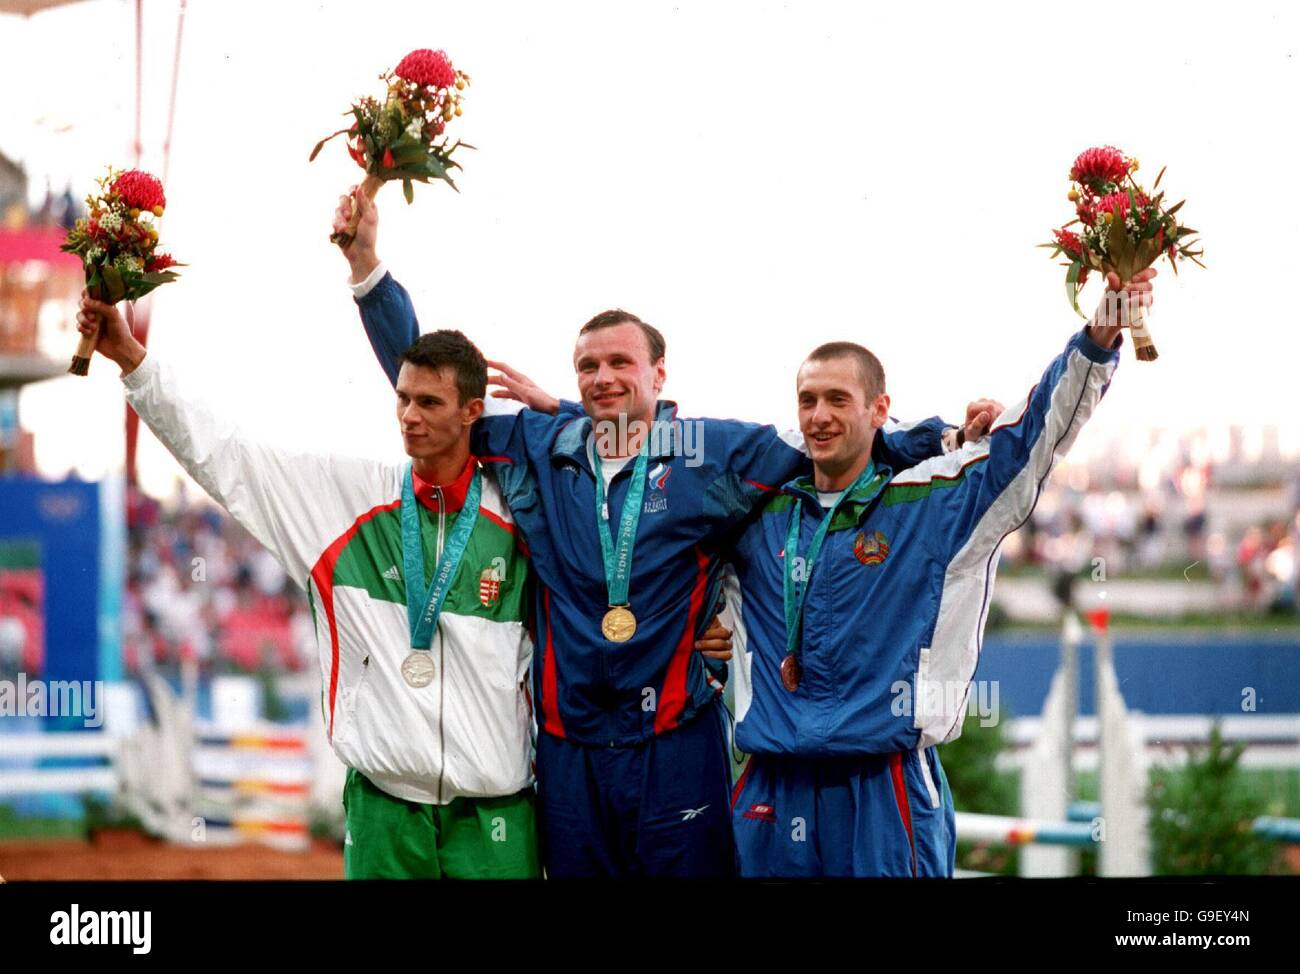 Hungary's Balogh Russia's Dmitry Svatkovsky (gold) and Belarus' Pavel Dovgal (bronze), celebrate on the podium Stock Photo - Alamy